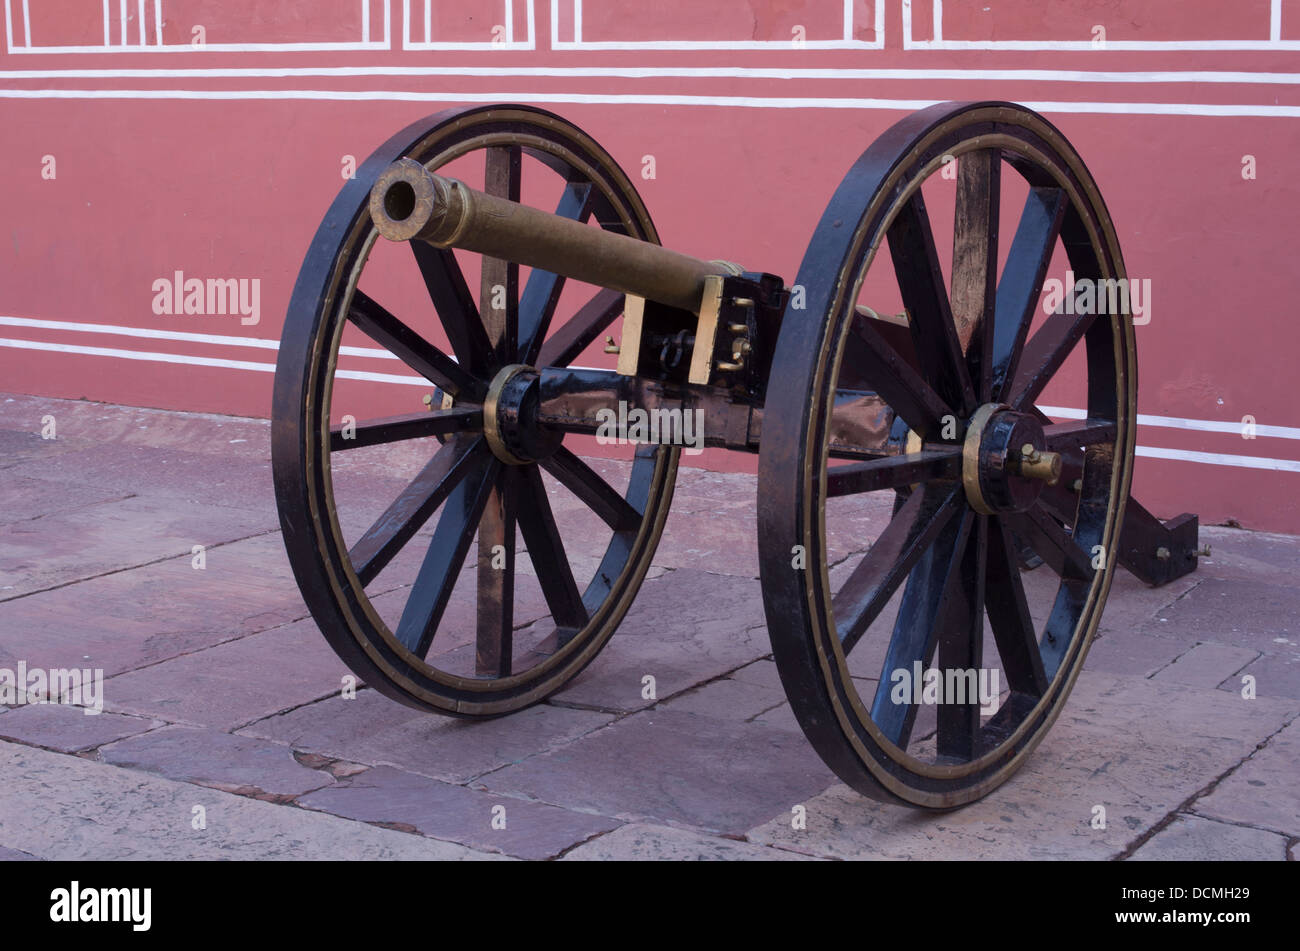 Cannons on display at City Palace - Jaipur, Rajasthan, India Stock Photo